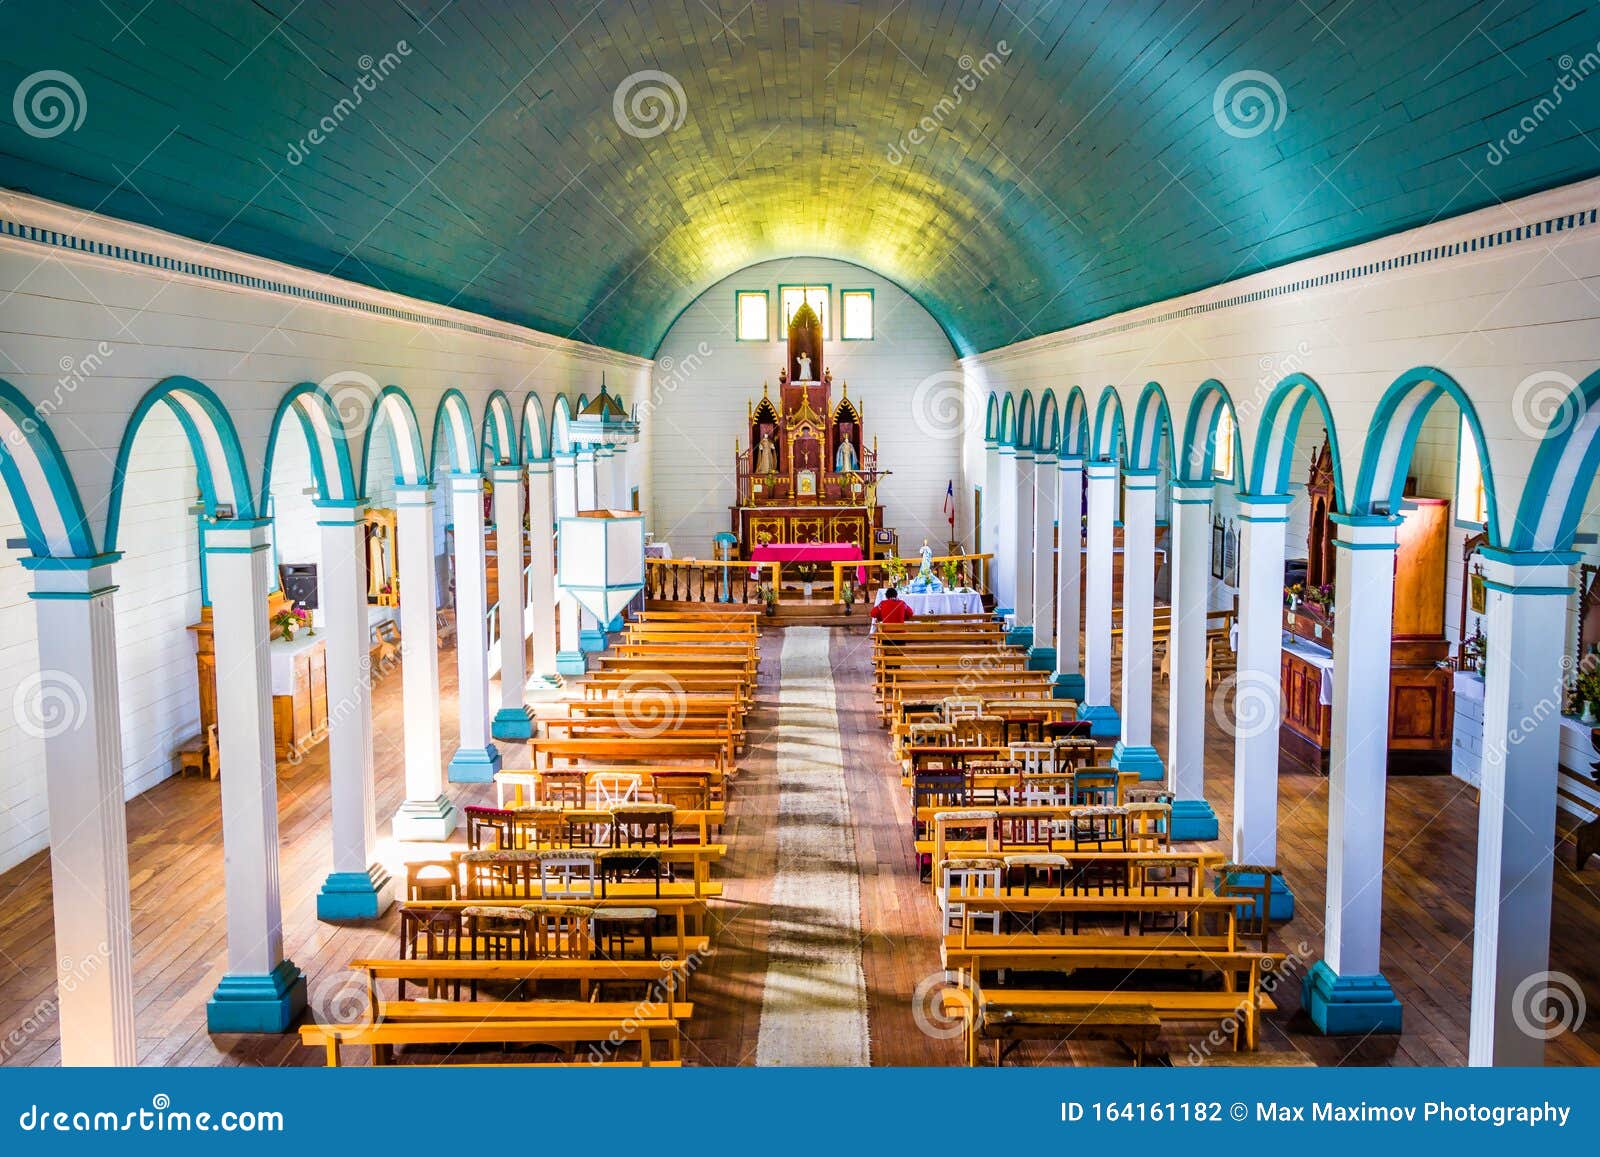 tenaun, chiloe archipelago, chile - inside the wooden jesuit church in tenaun